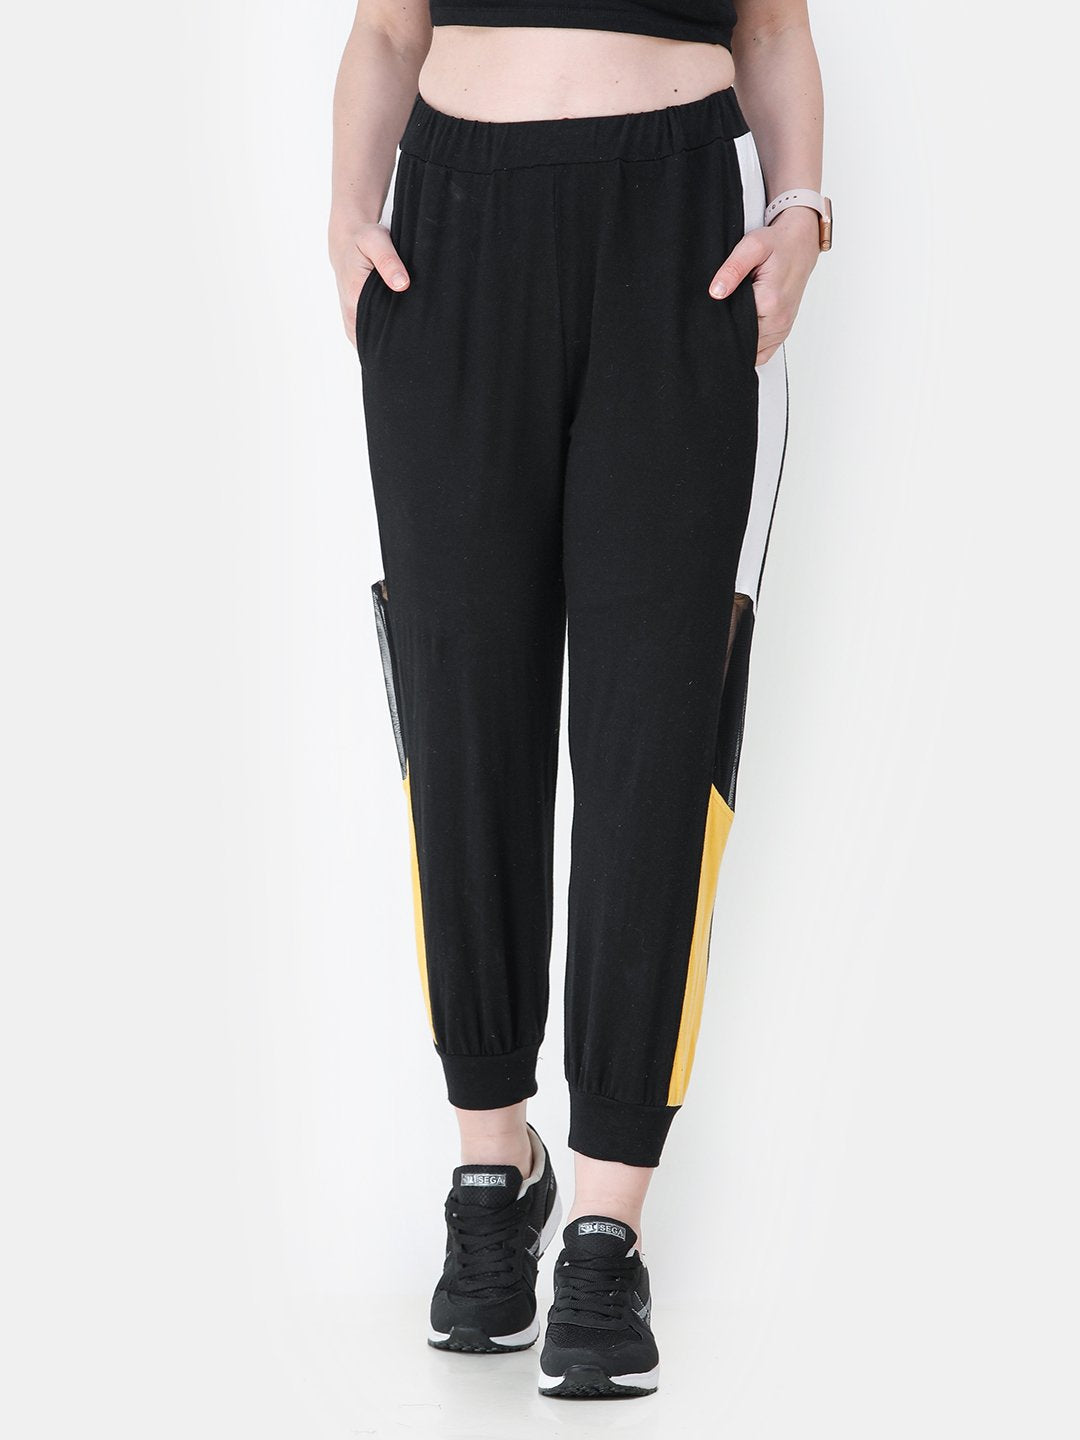 SCORPIUS Black velvet Pants – Cation Clothing